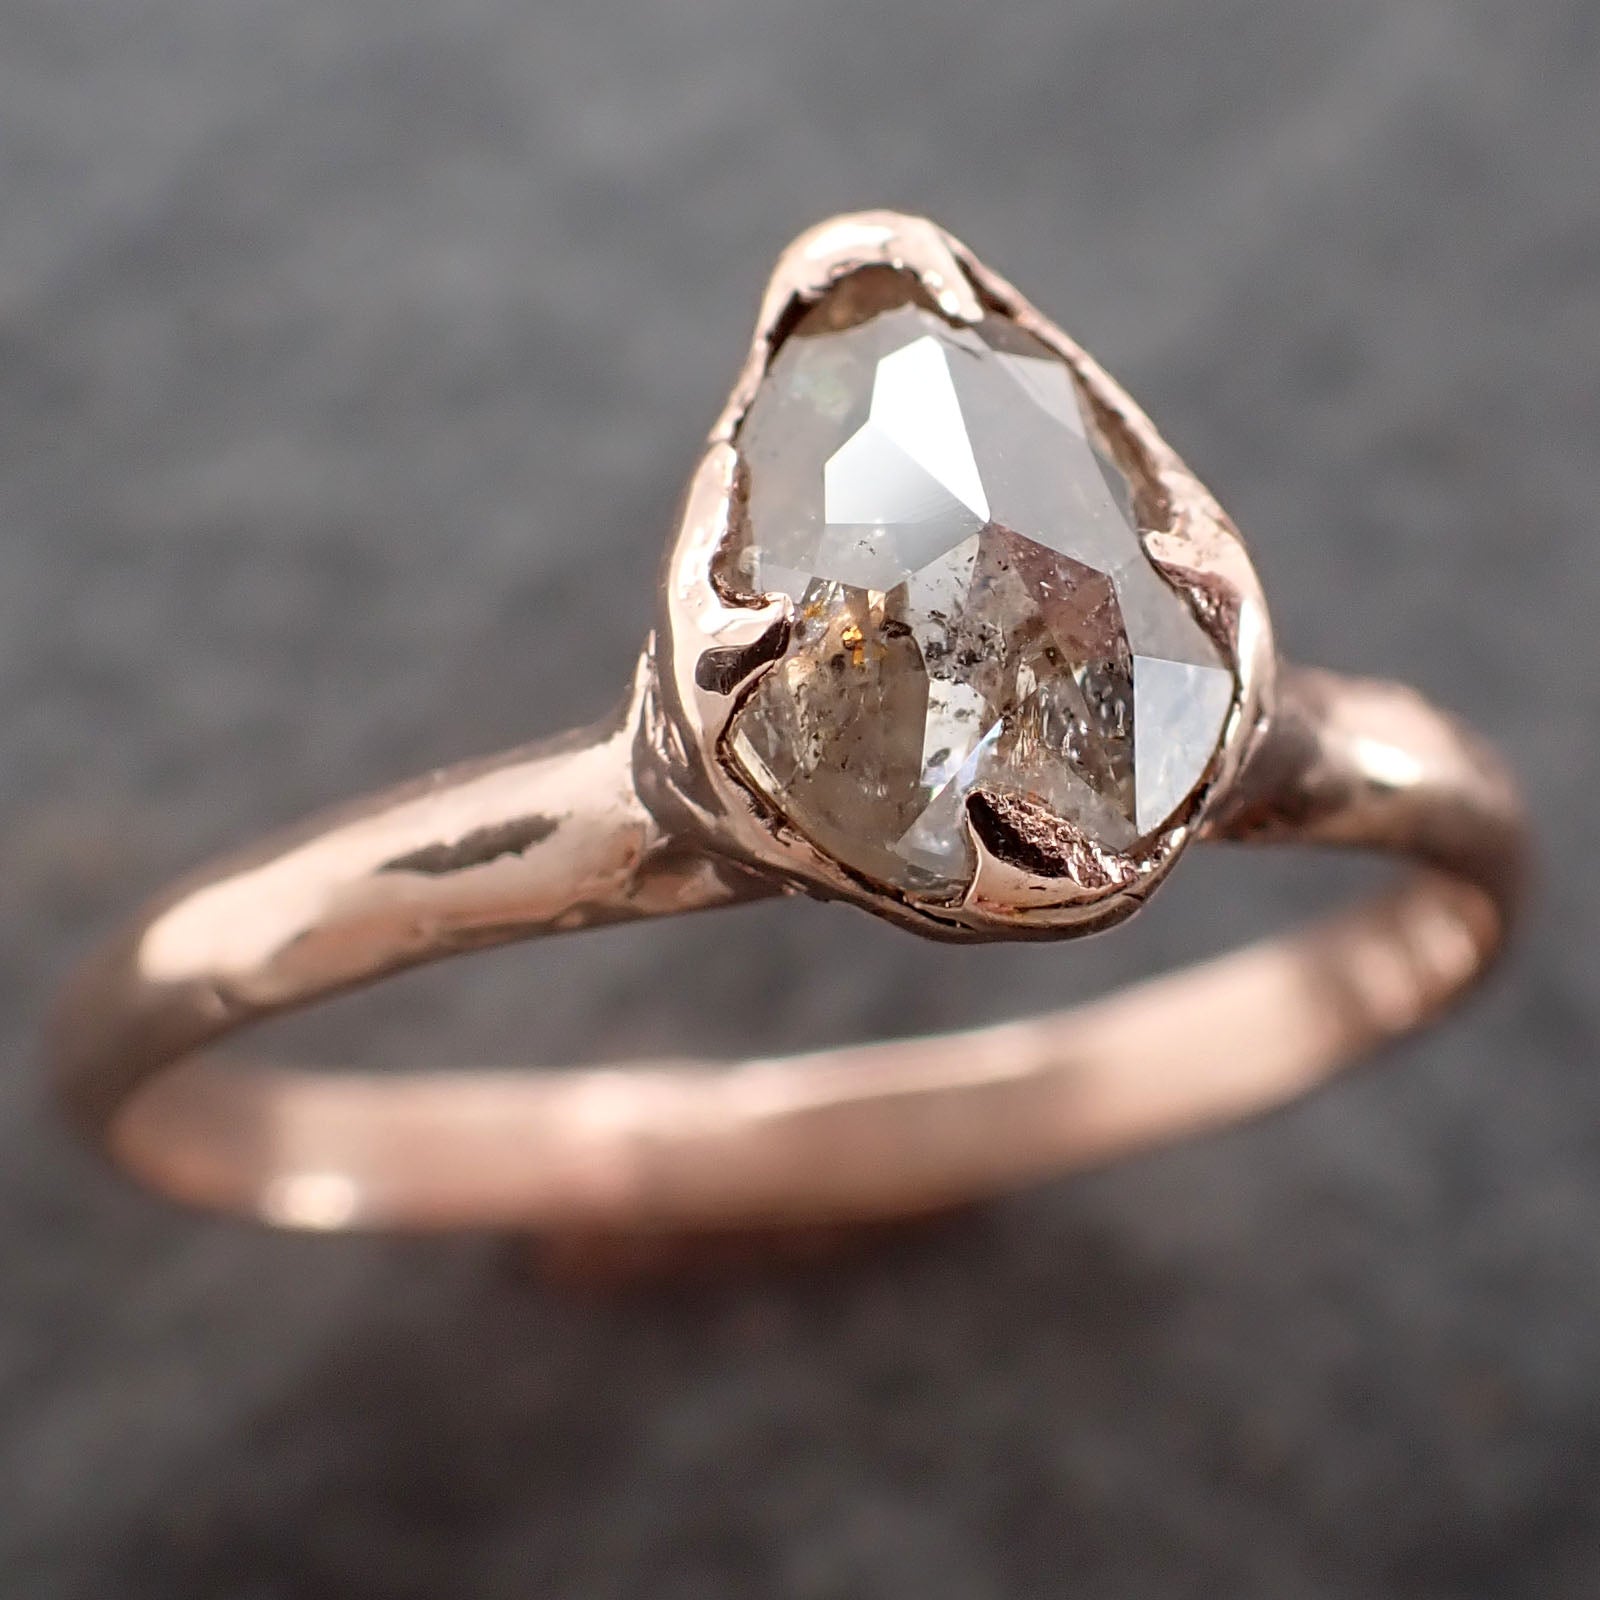 faceted fancy cut salt and pepper diamond solitaire engagement 14k rose gold wedding ring byangeline 2588 Alternative Engagement